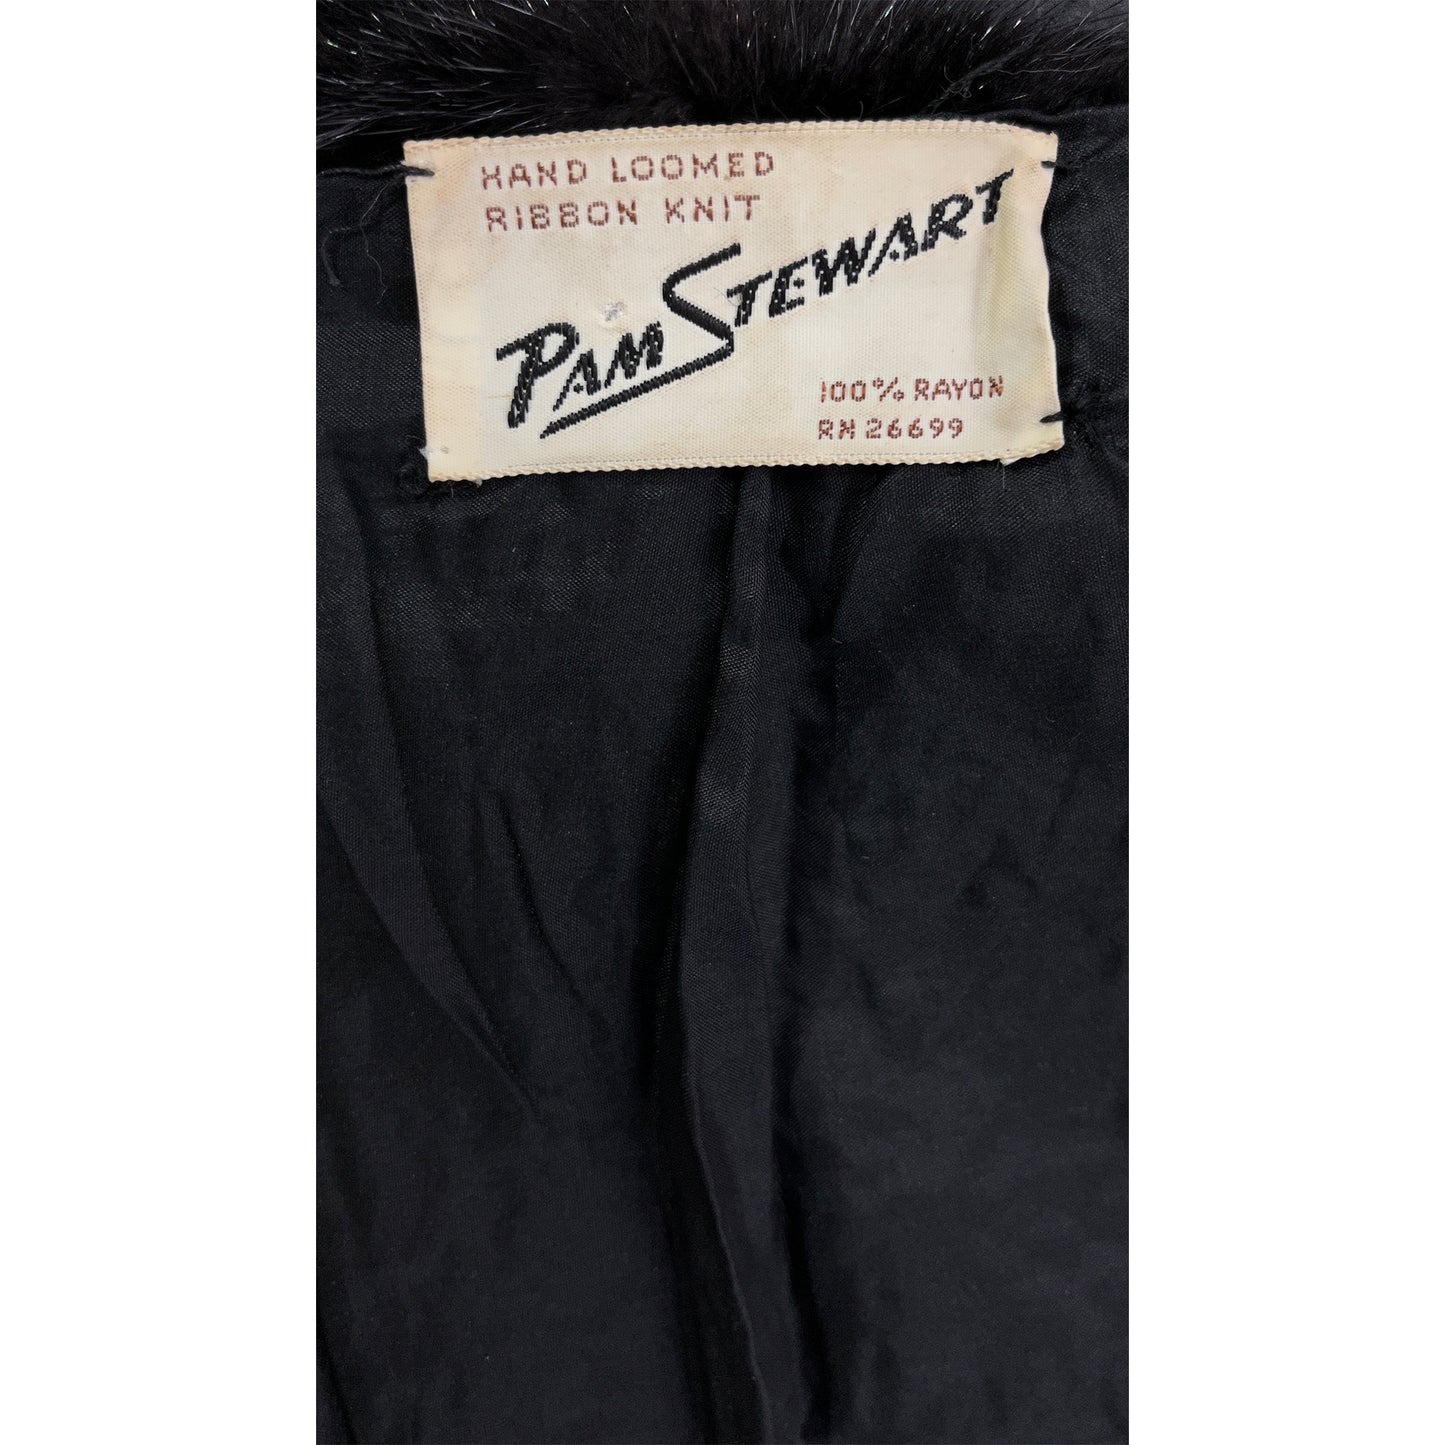 Pam Stewart Jacket Crop 3/4 Sleeves Fur Collar Black Size S/ M SKU 000042-3